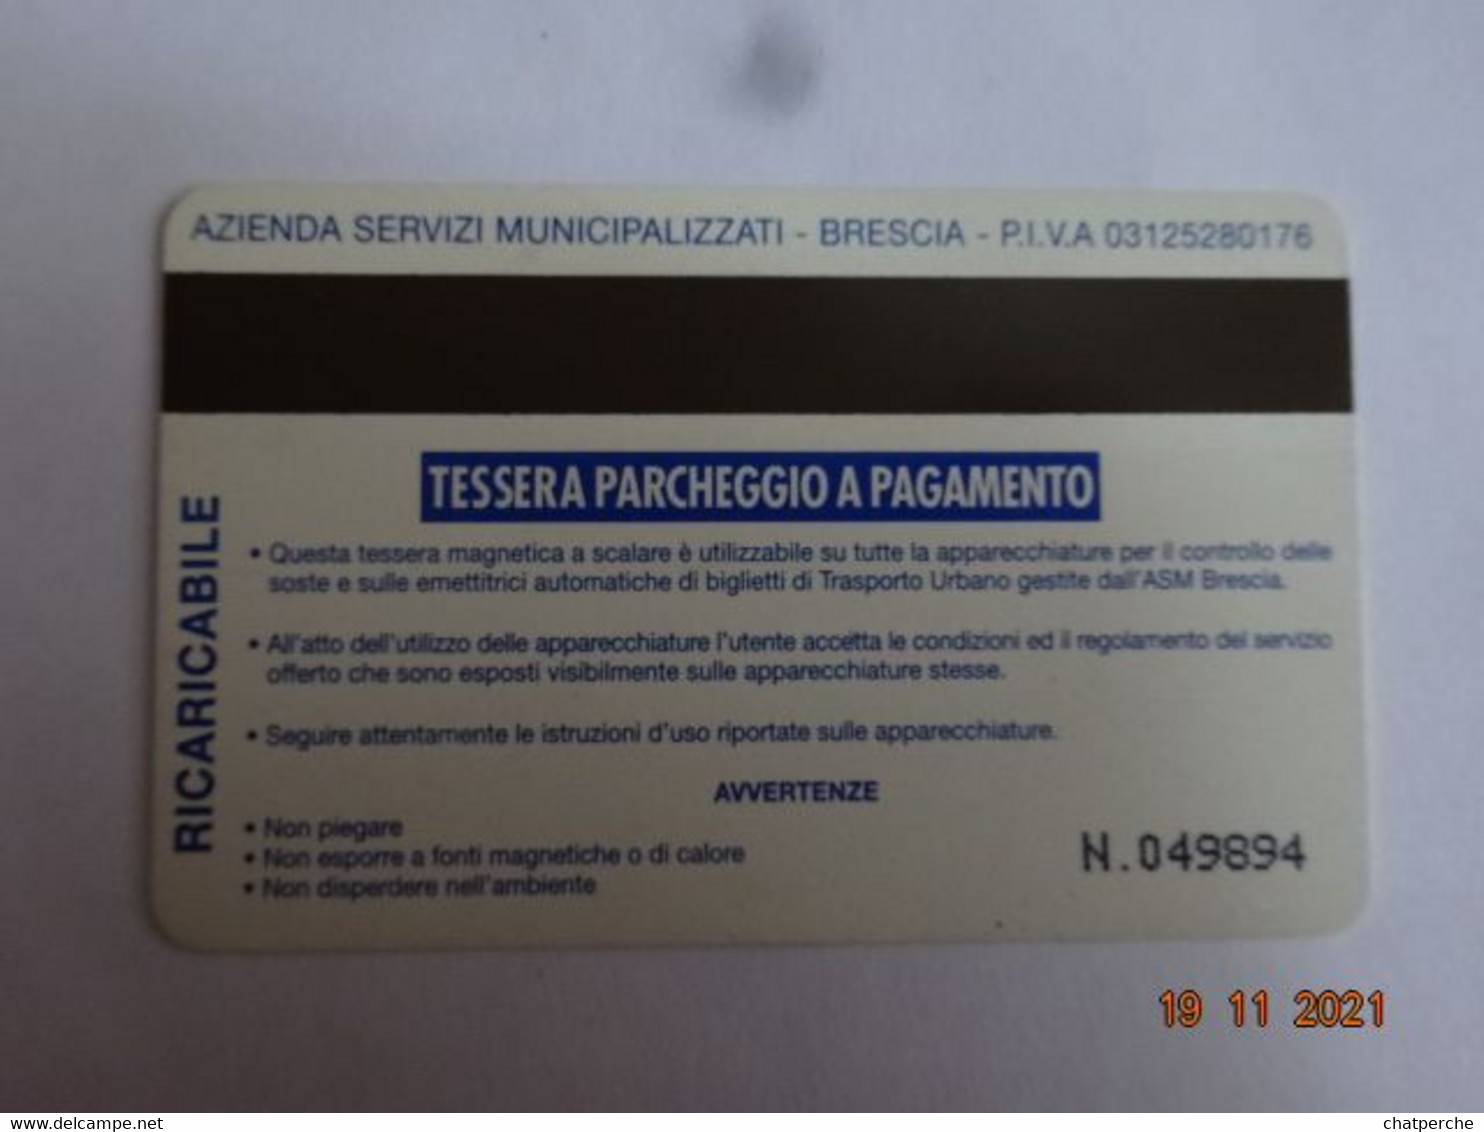 ITALIE ITALIA CARTE STATIONNEMENT BANDE MAGNÉTIQUE PARKIBG CARD BRESCIA - [4] Collections